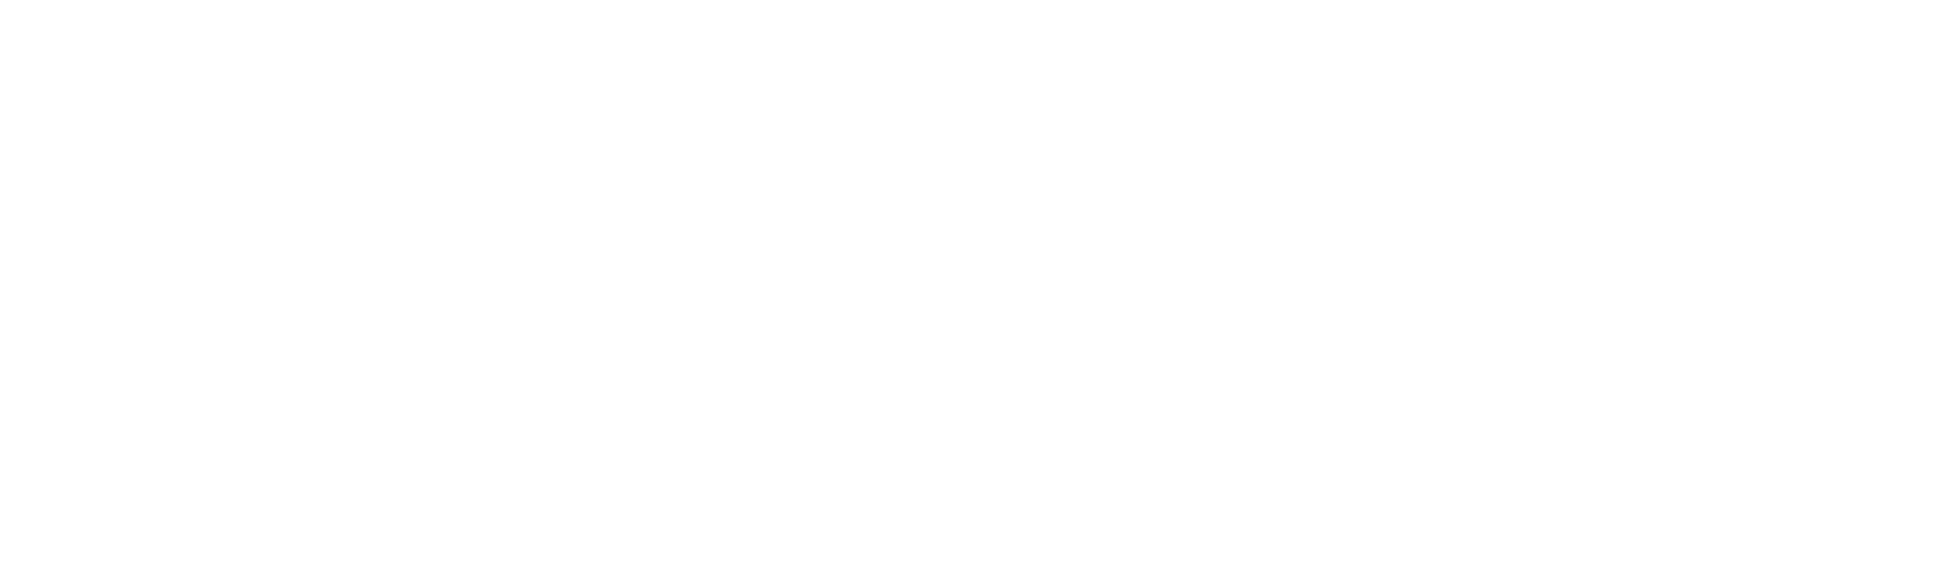 Sustainable Land Management Connectors